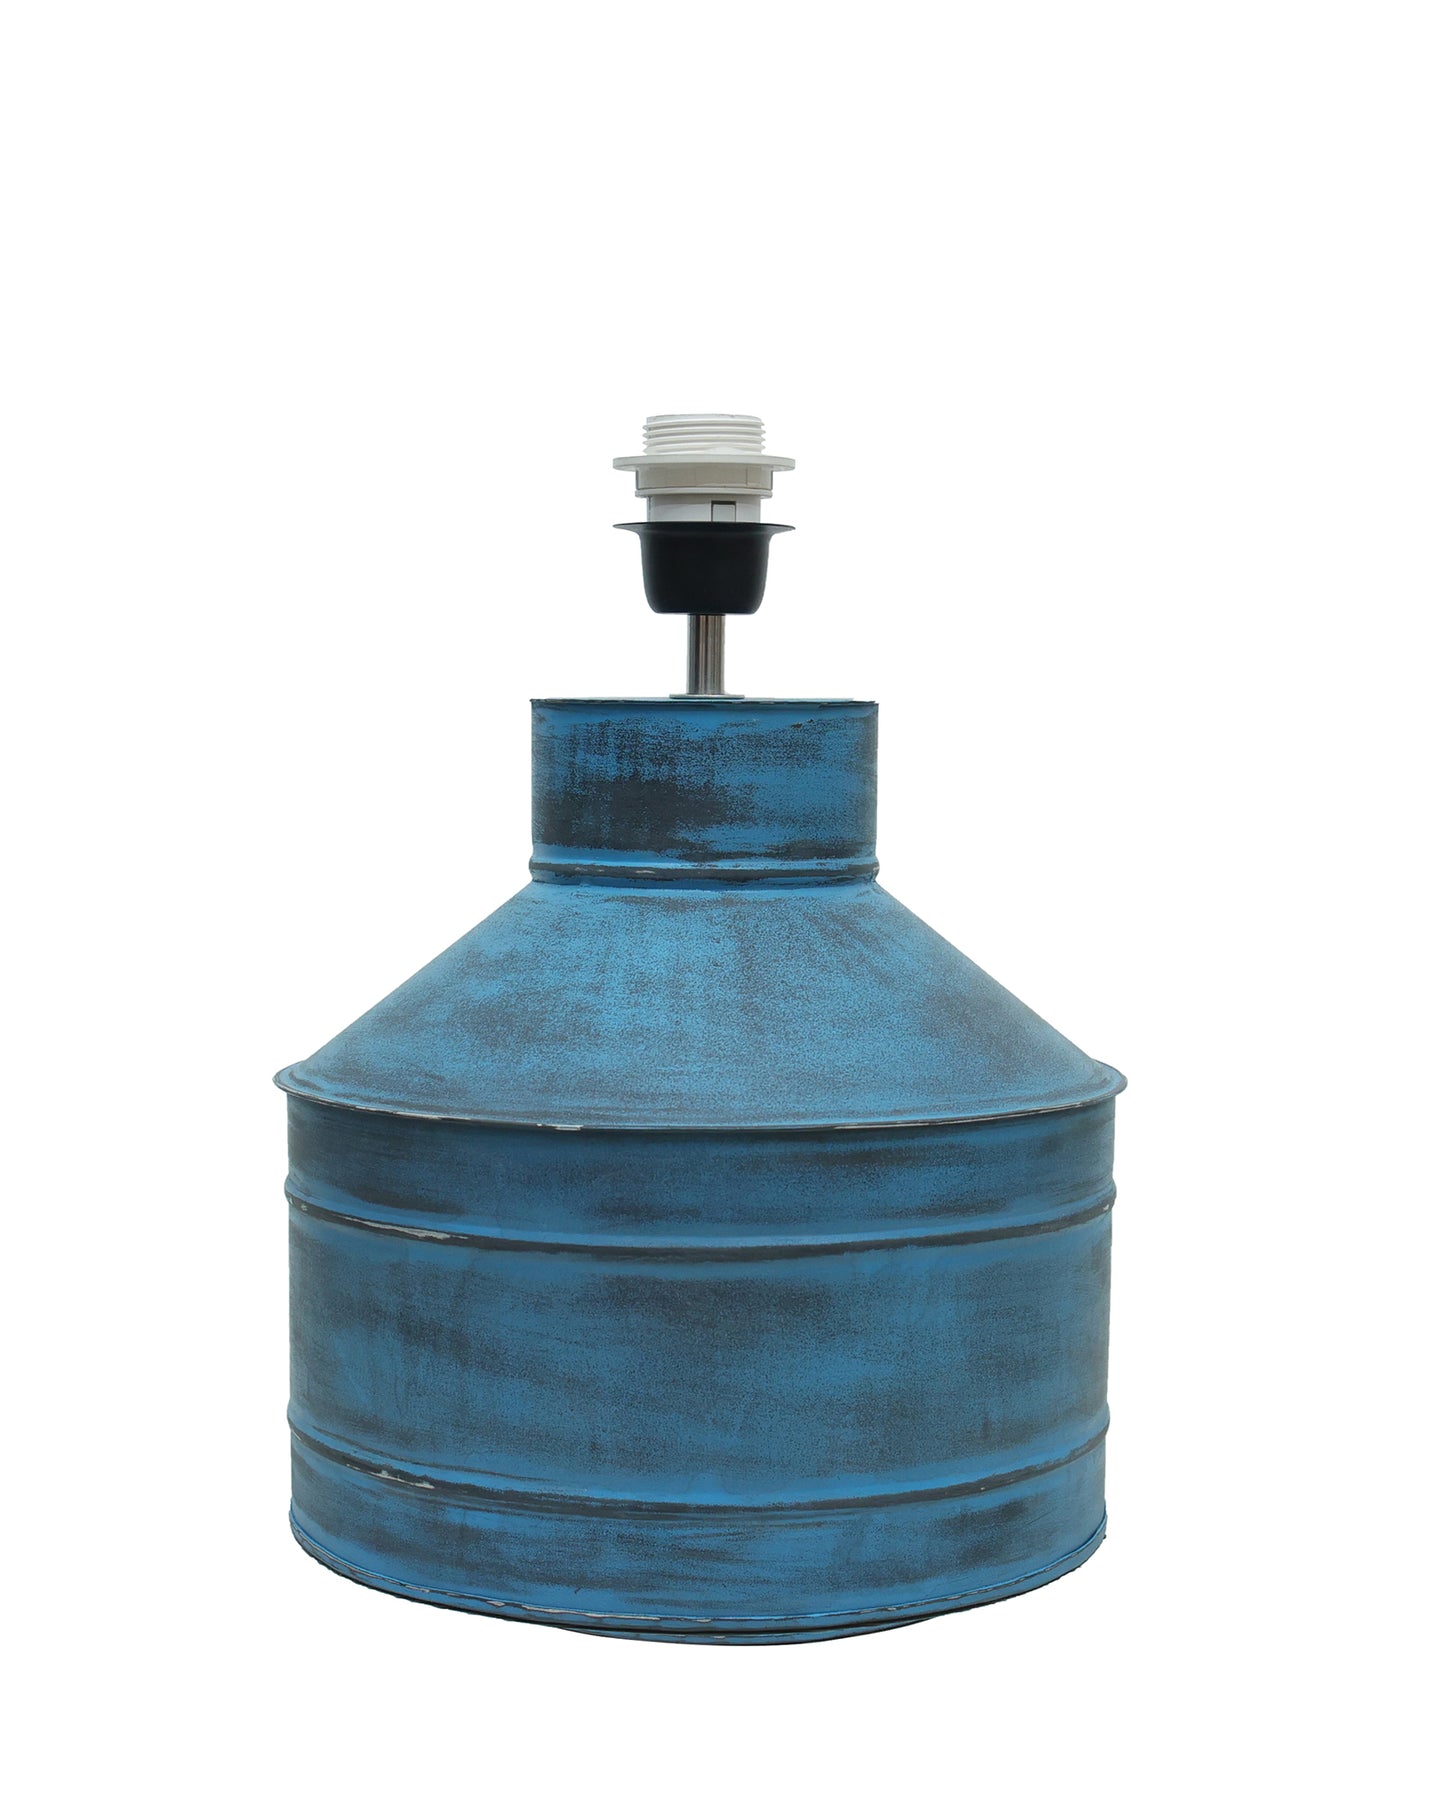 Rustic Milk Gagar Table Lamp with cone shade, Rustic Algae